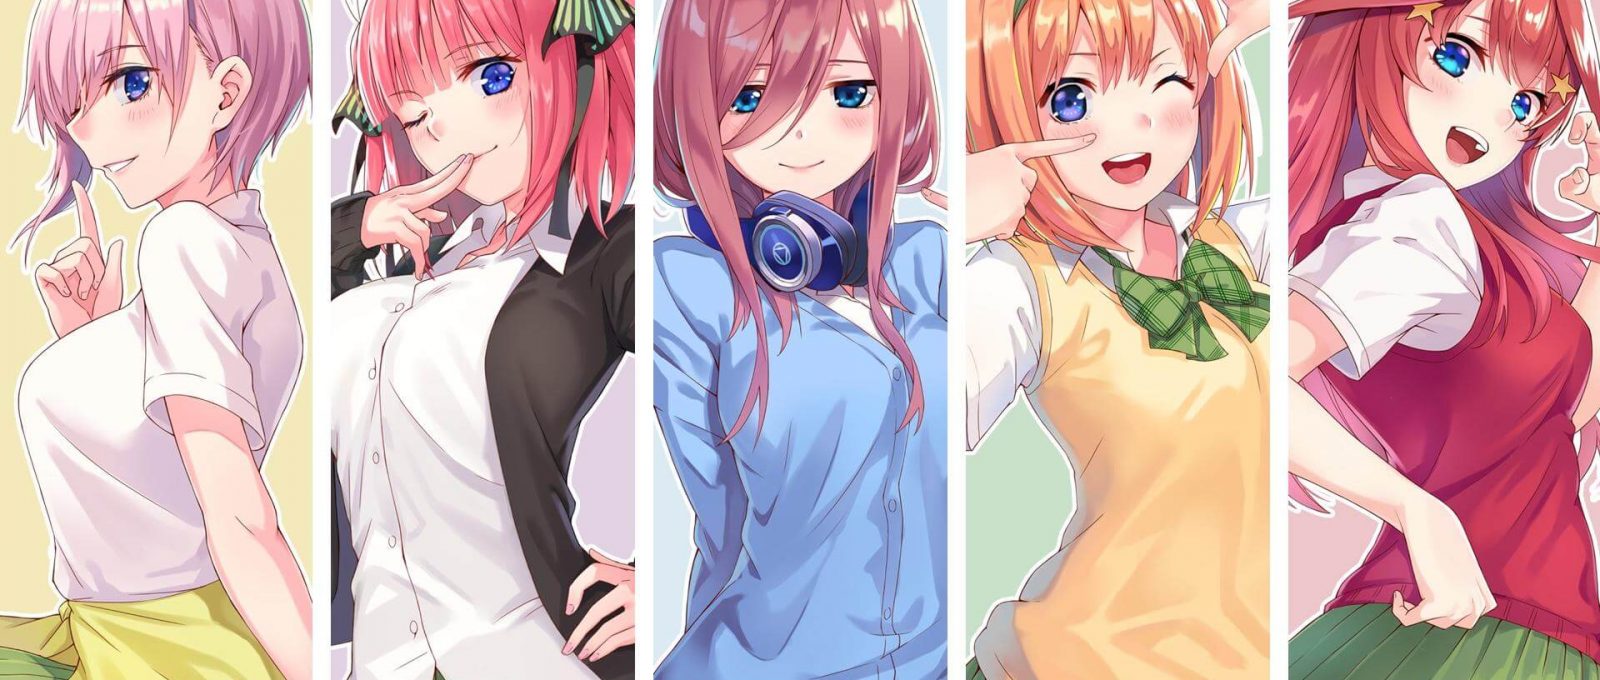 cute anime girls cover (1)